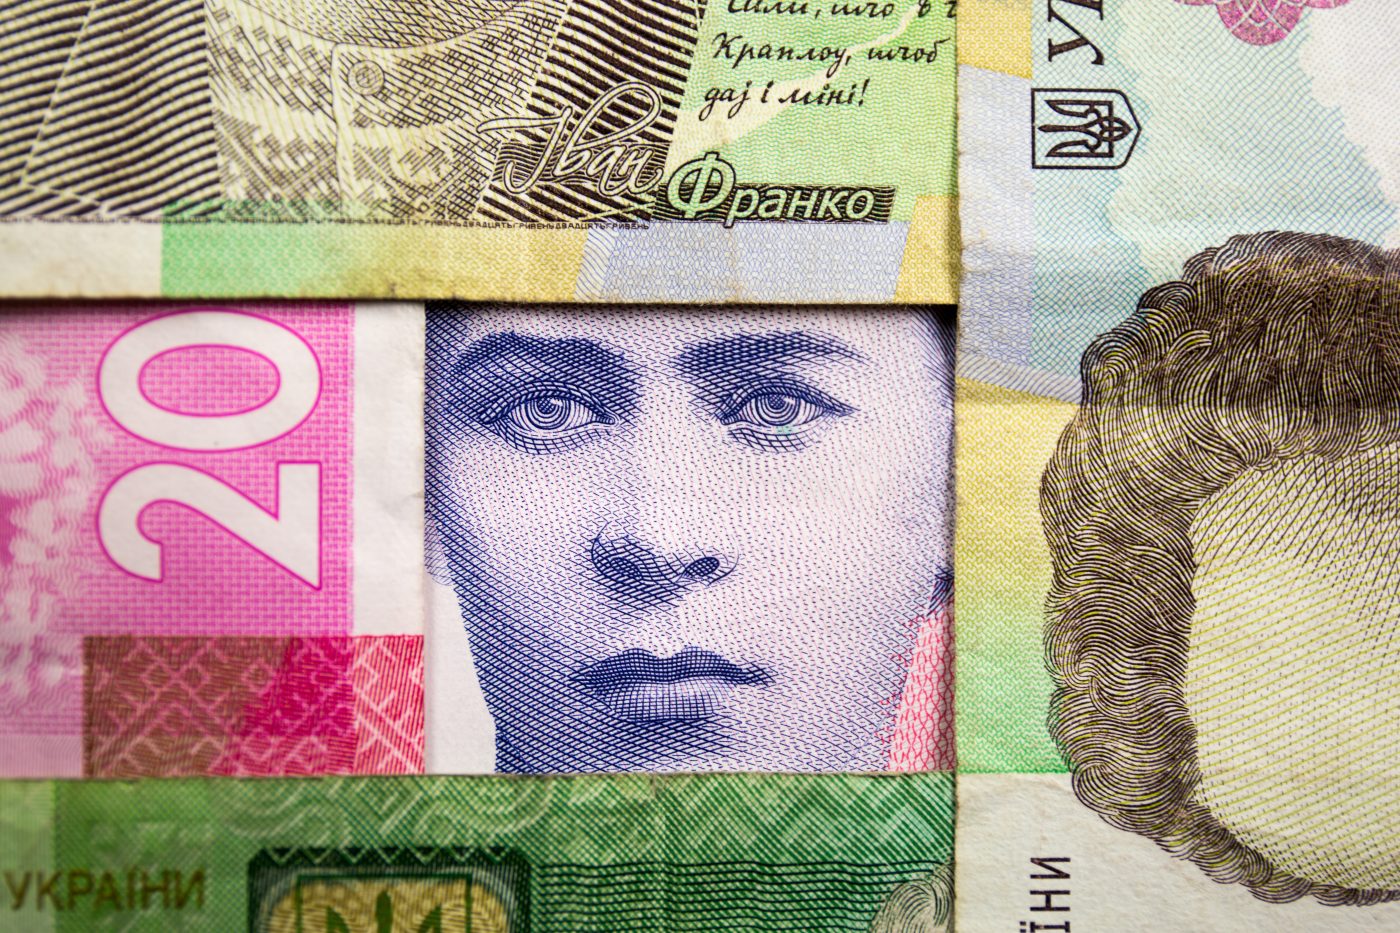 Photo: 200 Ukrainian Hryvnias banknote with the image of Lesya Ukrainka and other Ukrainian hryvnia banknotes. Credit: Karol Serewis / SOPA Images/Sipa USA